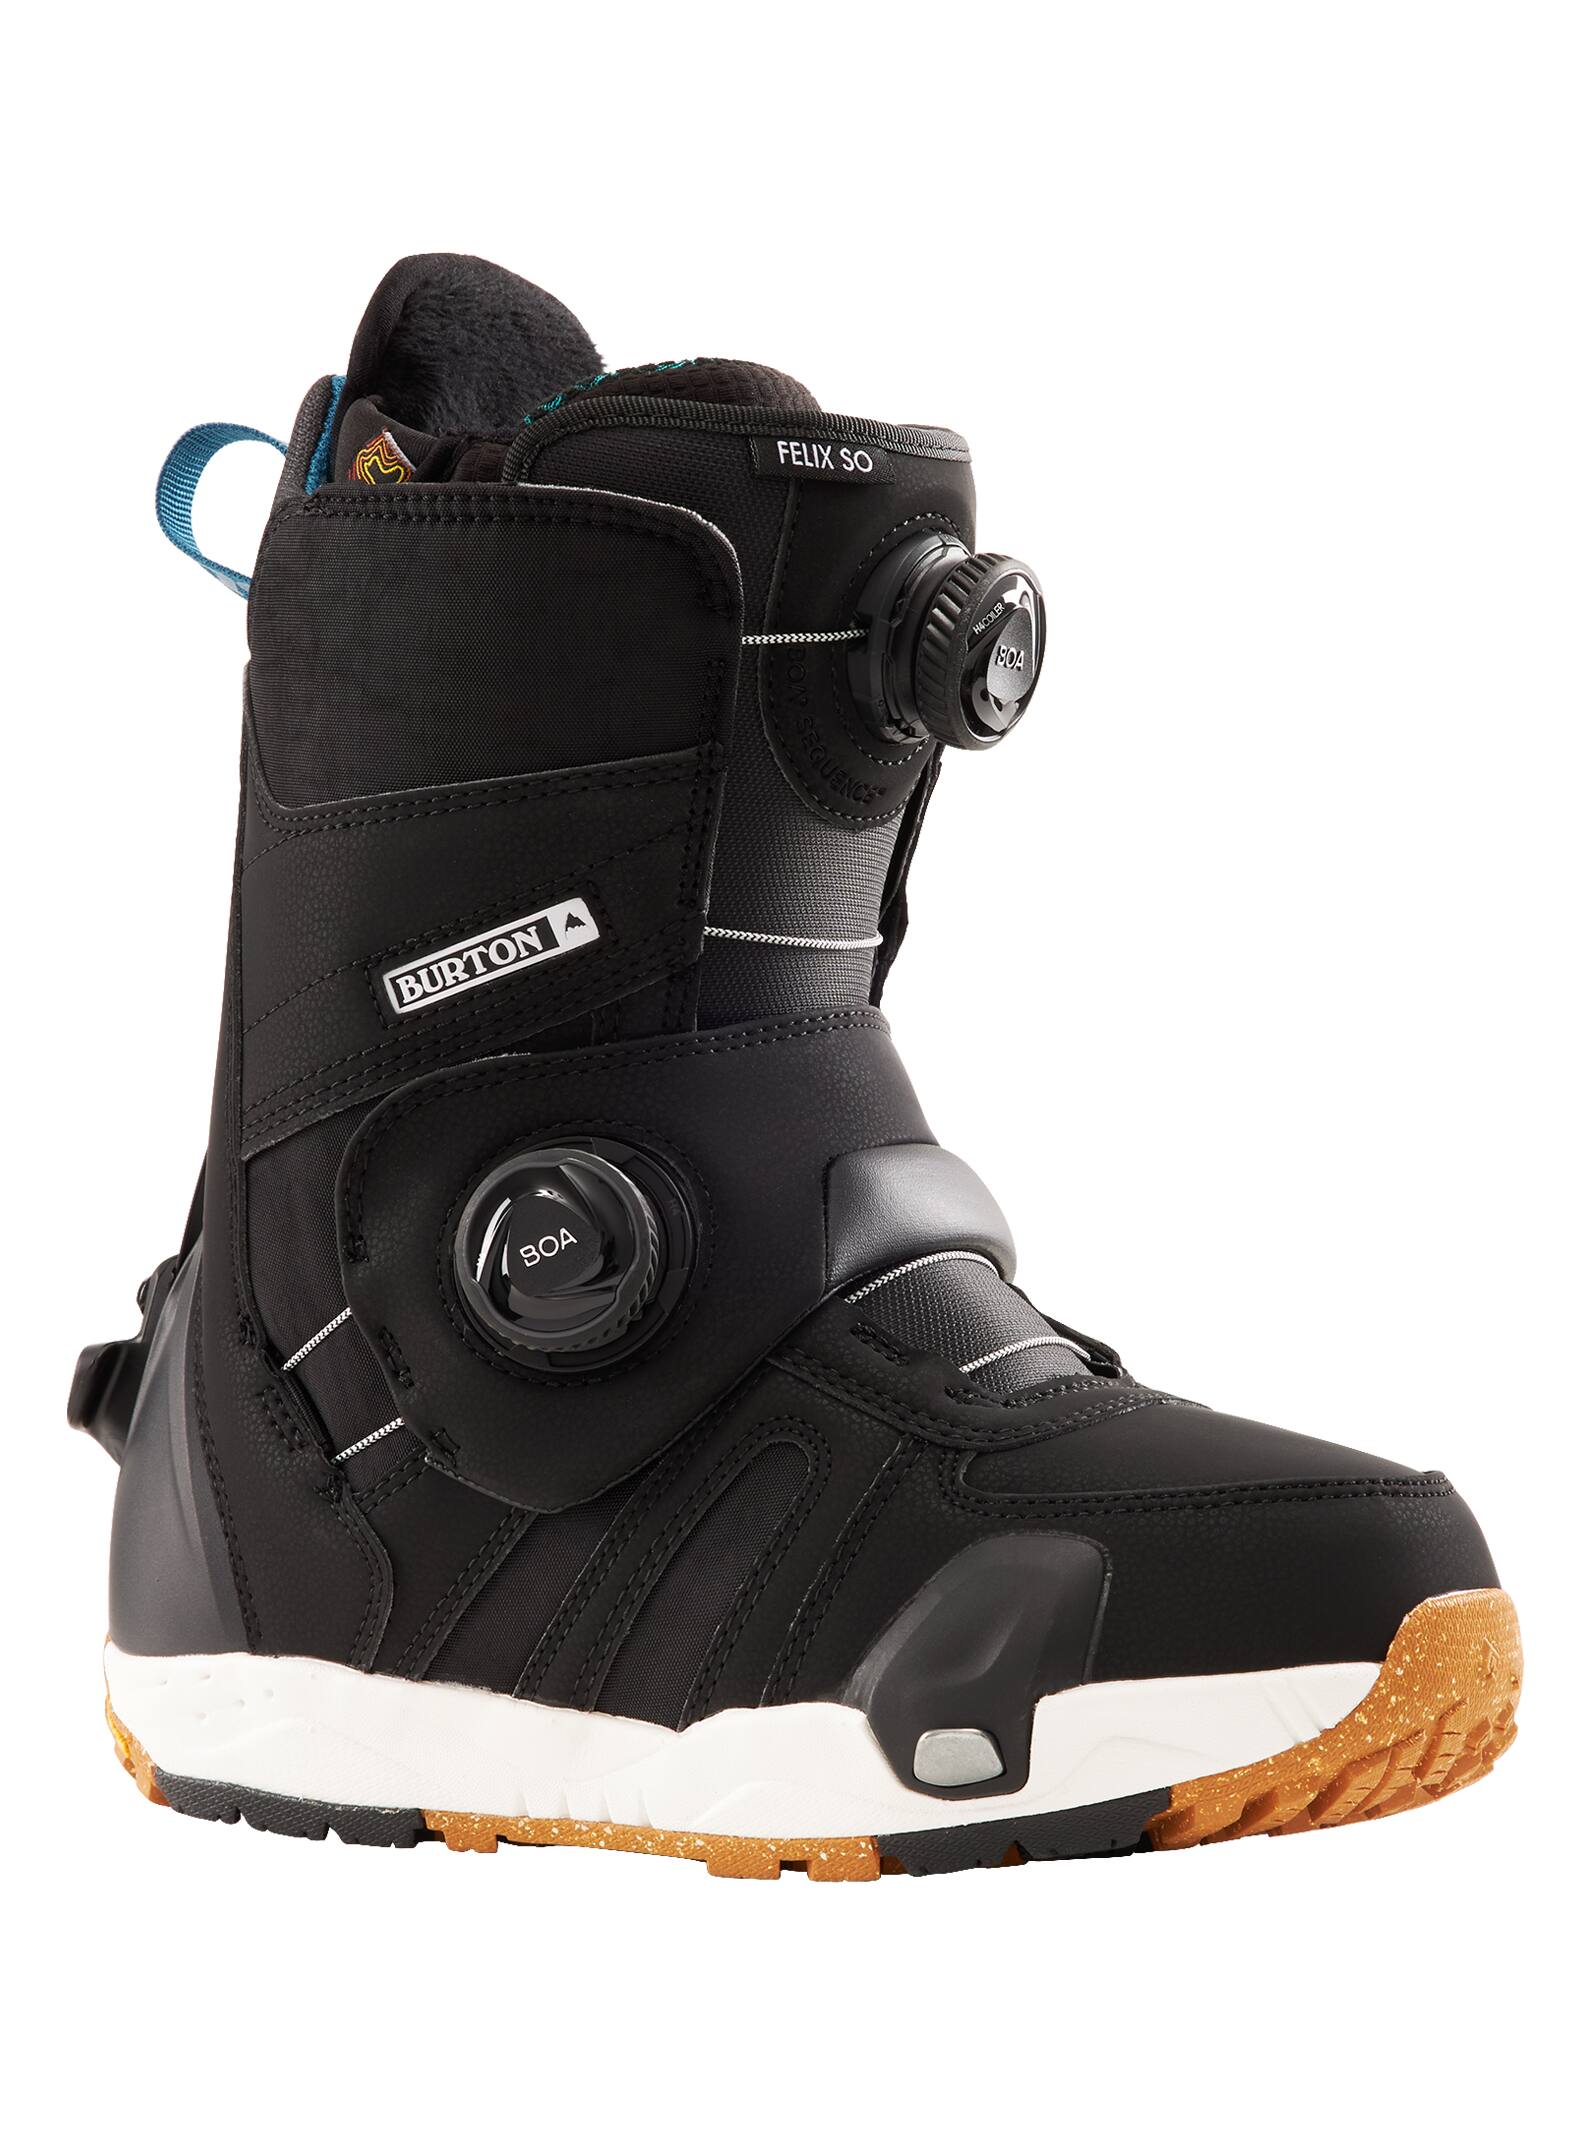 New Womans Snowboard Boots Sizes 5,6,7,8,9,10,11 Ton of brands Burton SnowJam... 